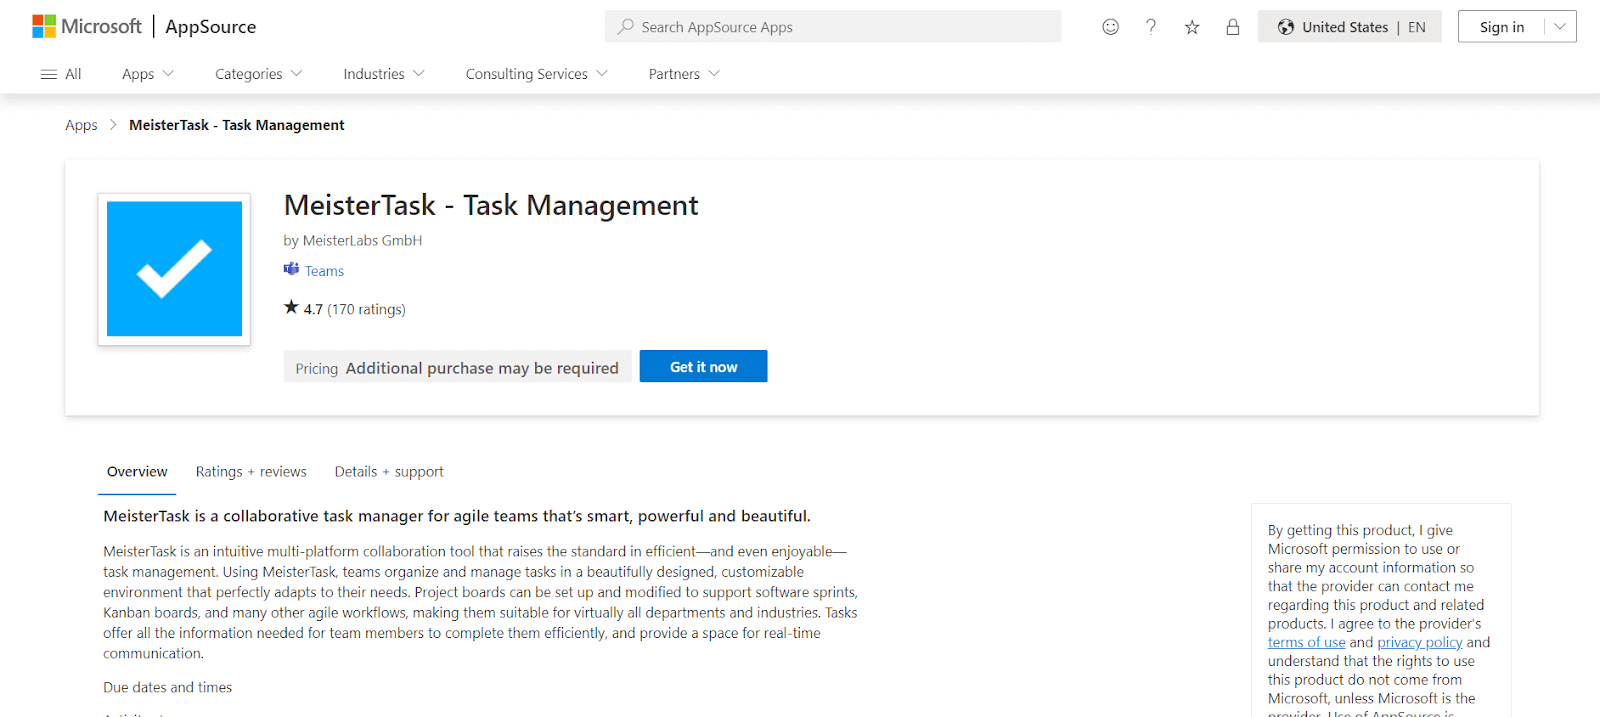 MeisterTask - Task Management